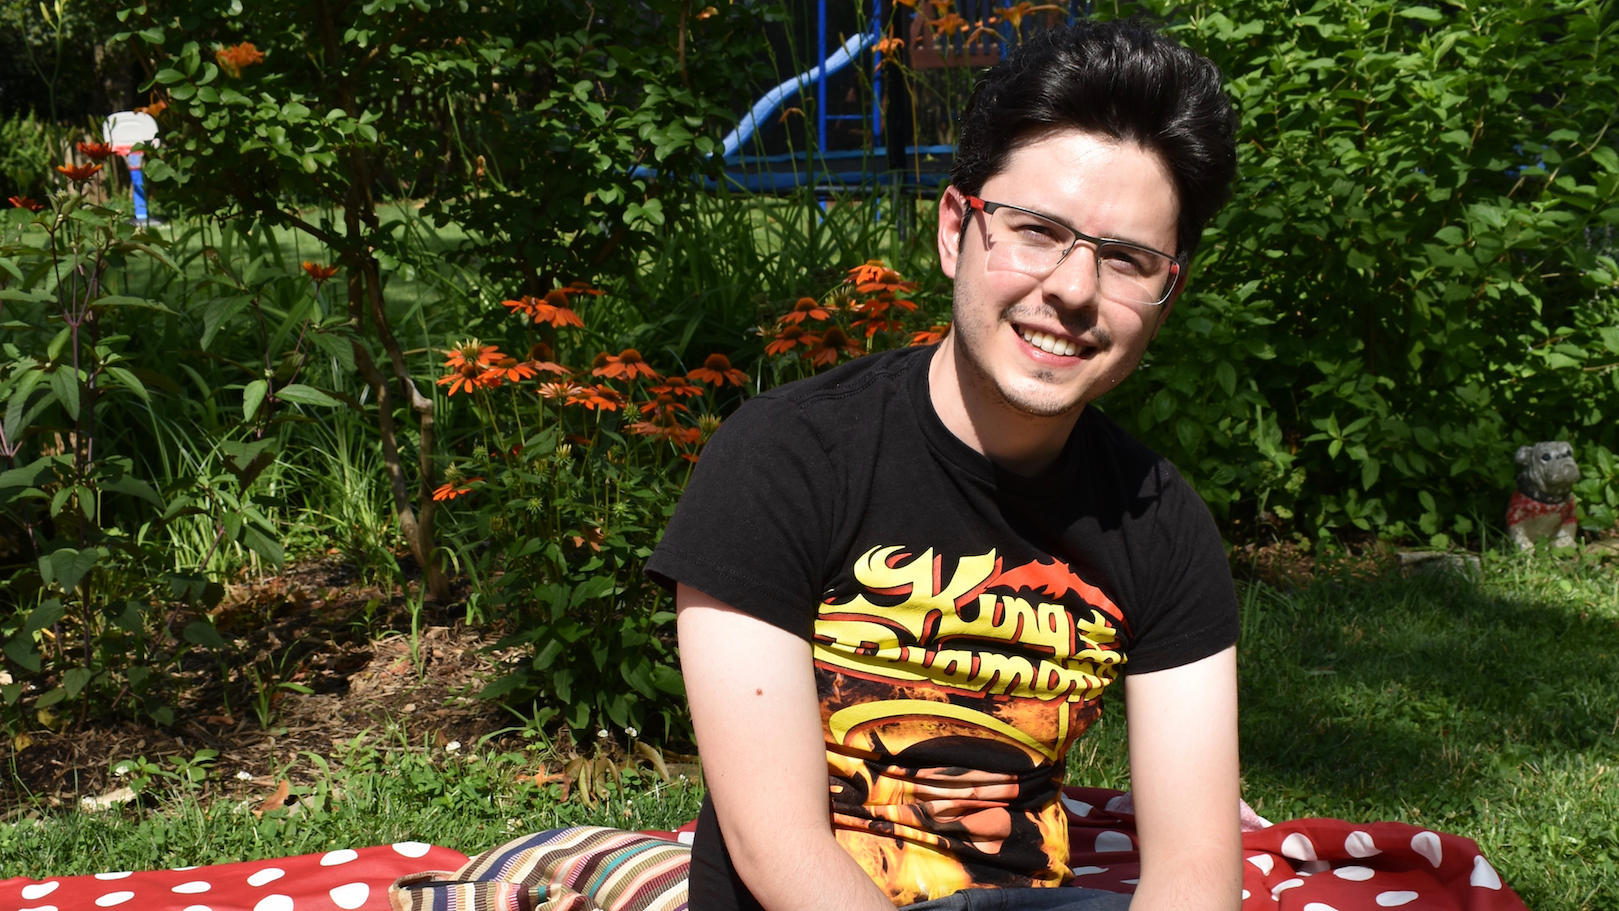 PhD student Rodrigo Ranero, sitting in a garden under summer sun, orange echinaceas in the background, wearing a "King Diamond" t-shirt.